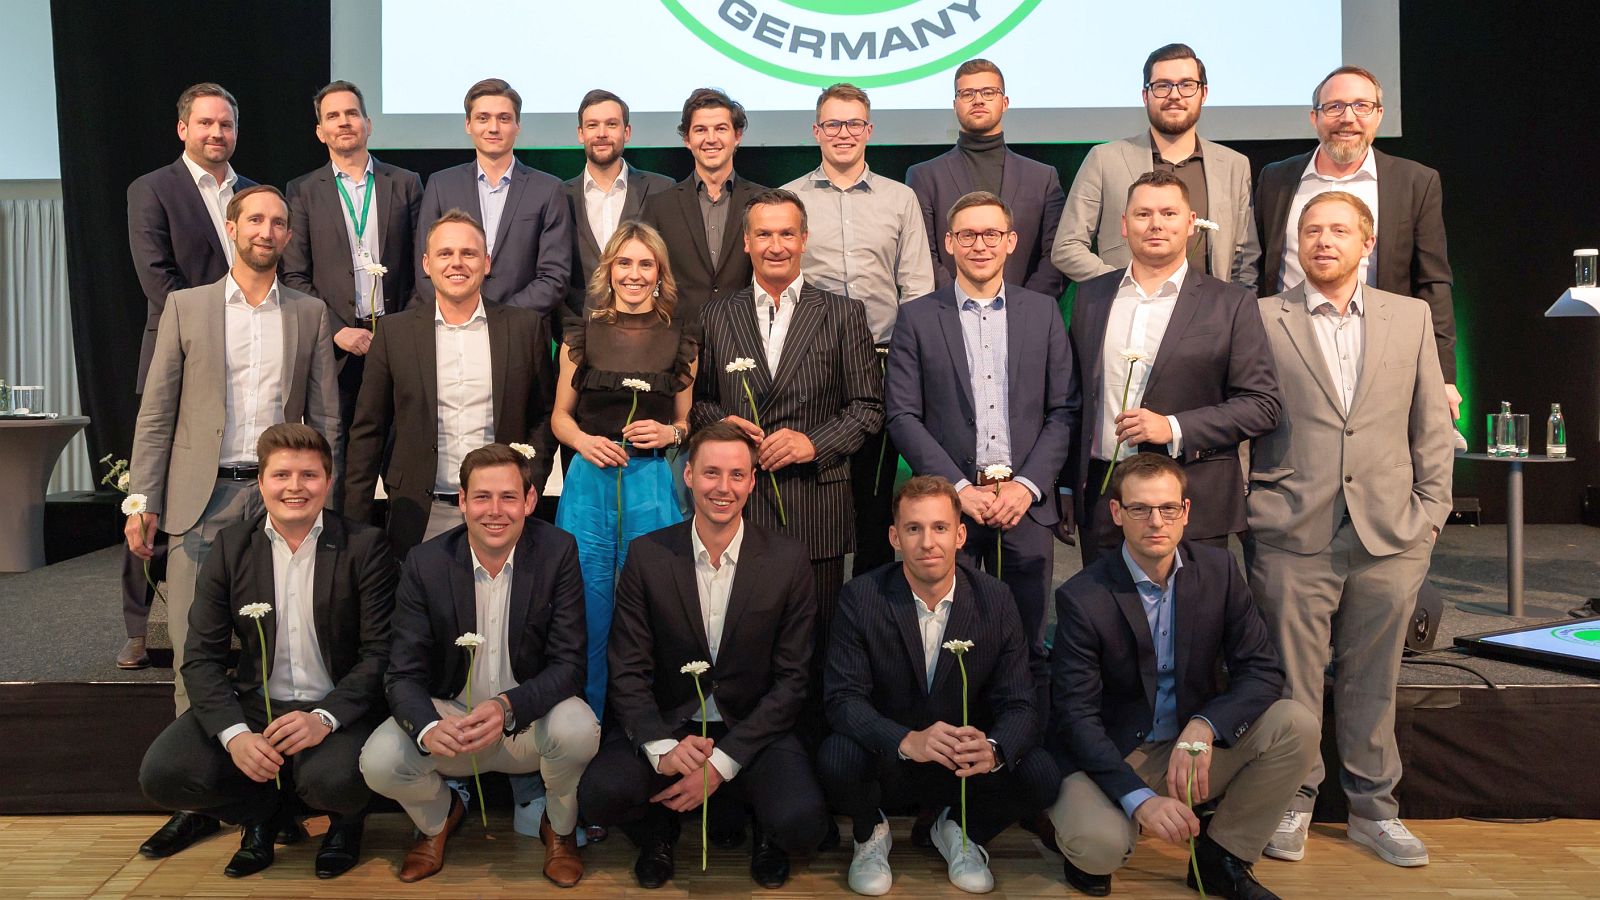 Fully Qualified PGA Professionals: der Abschlussjahrgang 2020. © Stefan Heigl/PGA of Germany